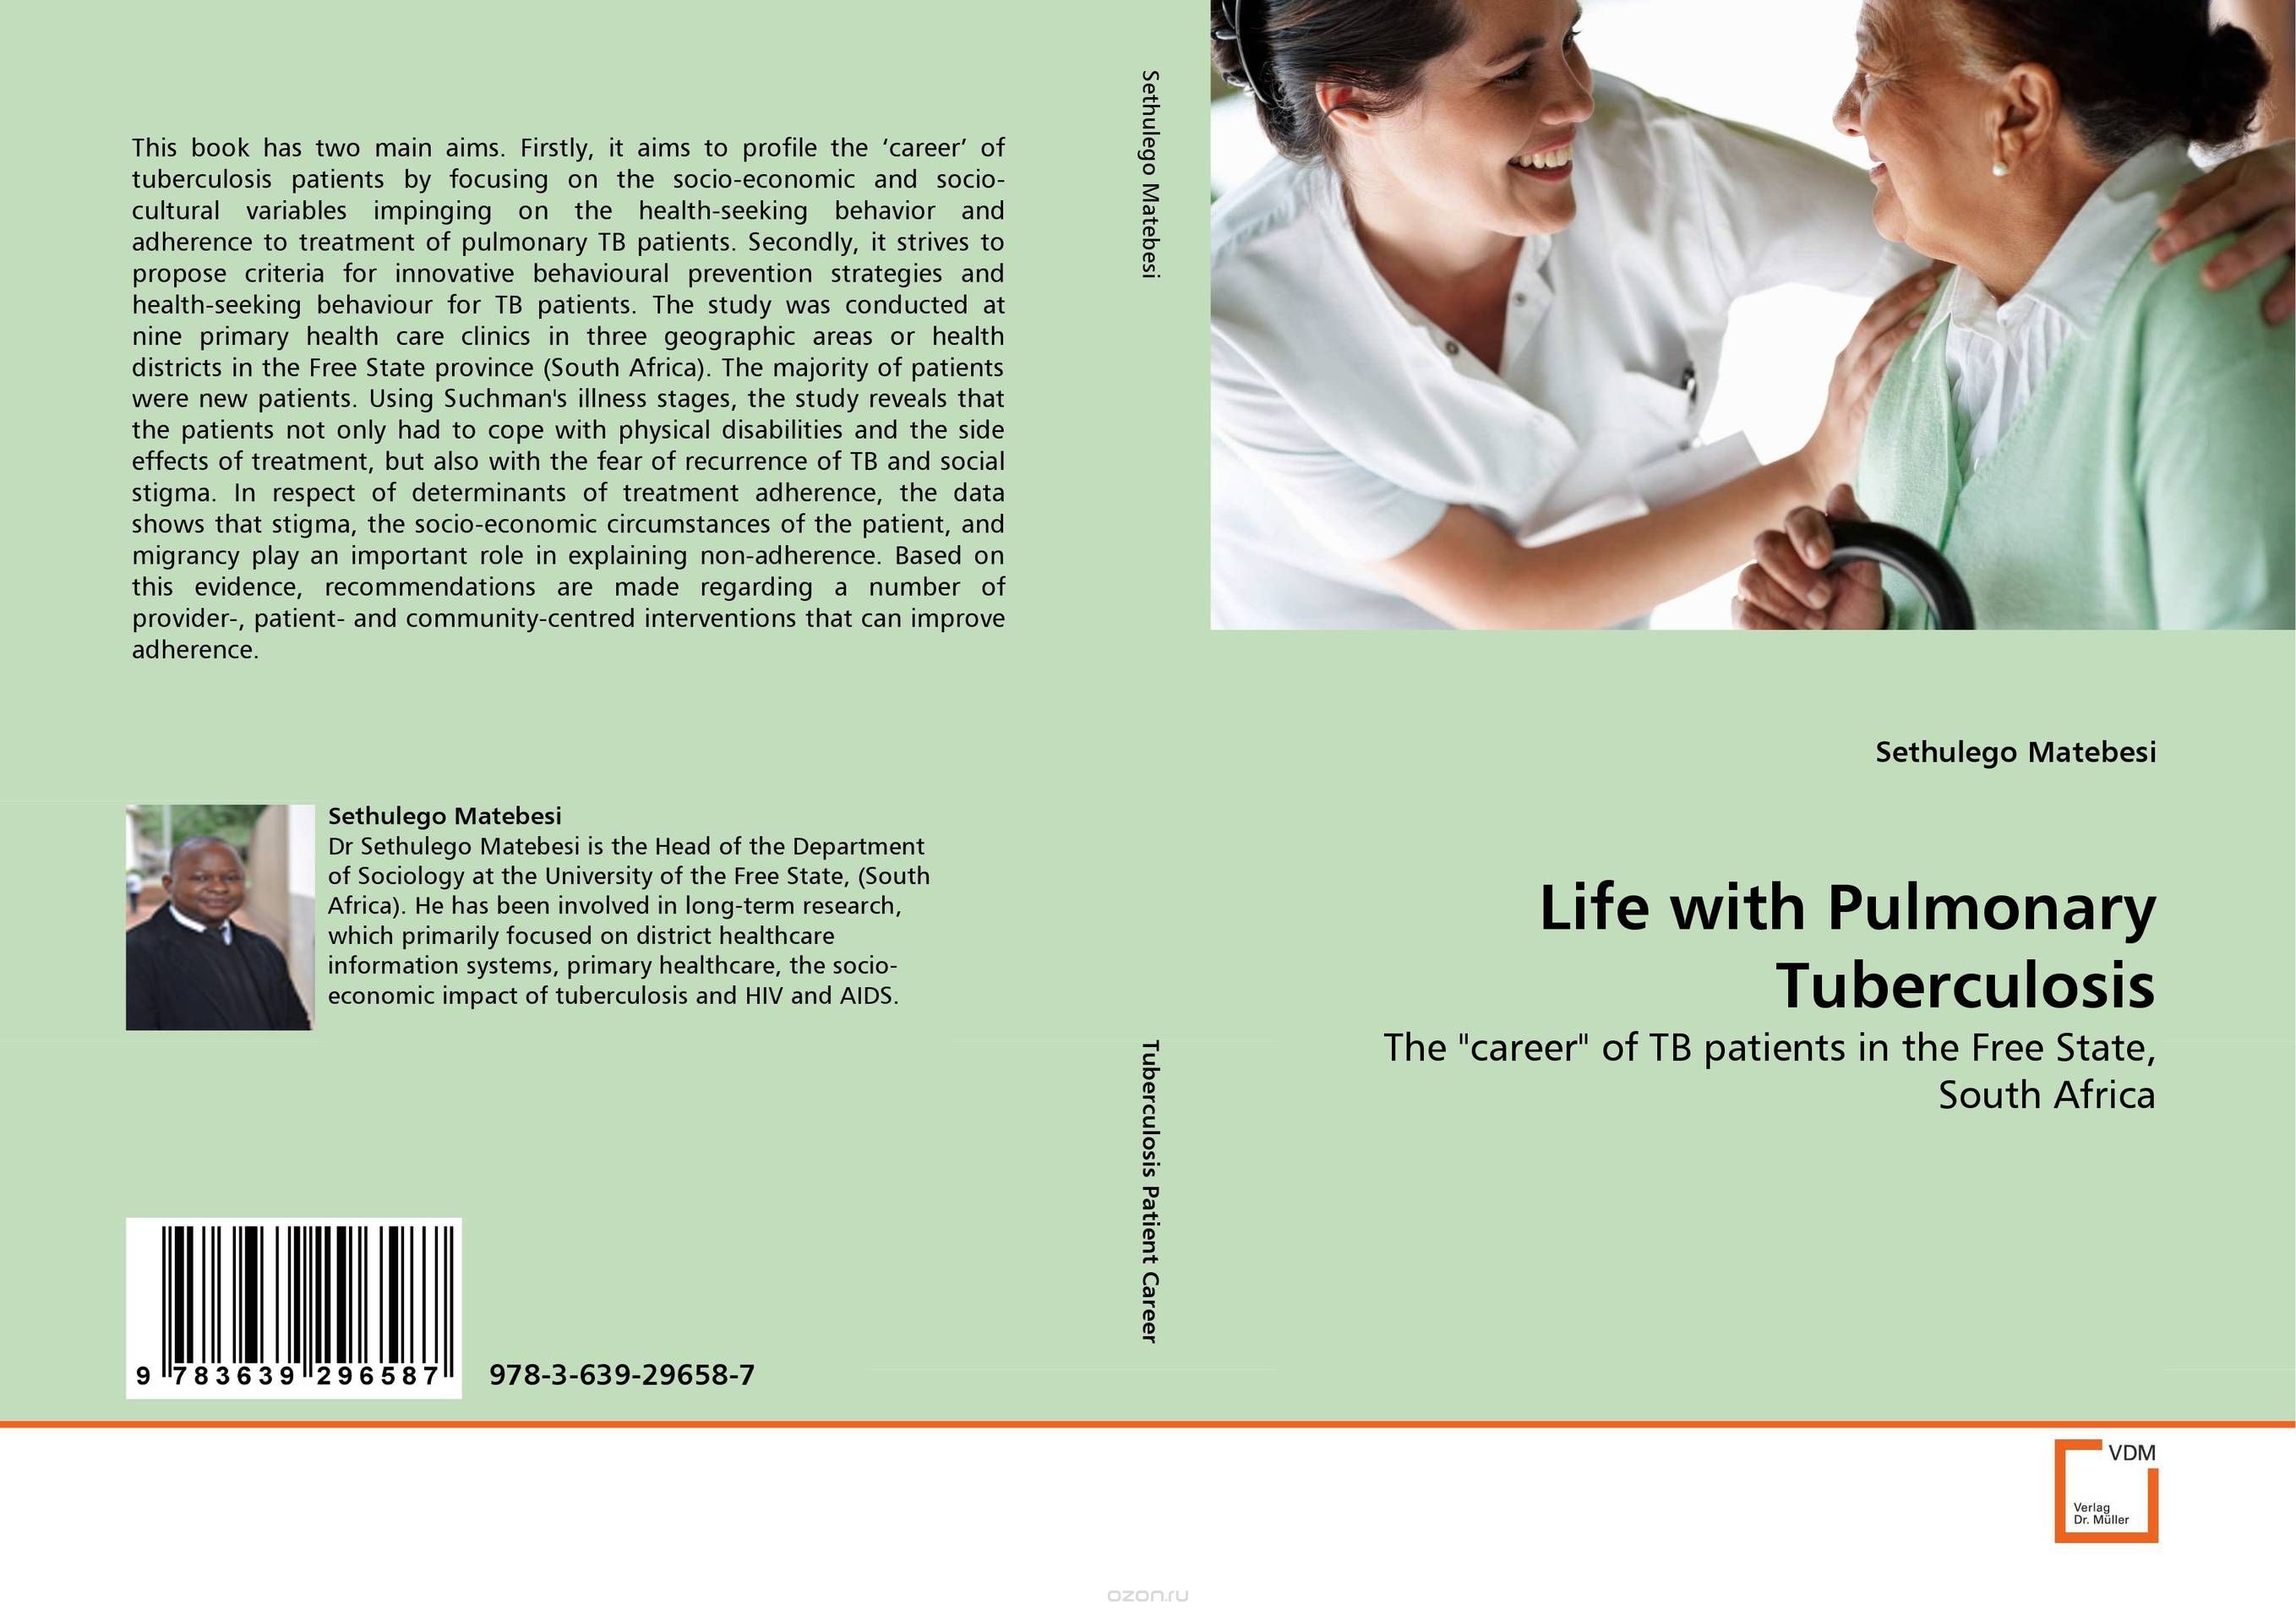 Life with Pulmonary Tuberculosis